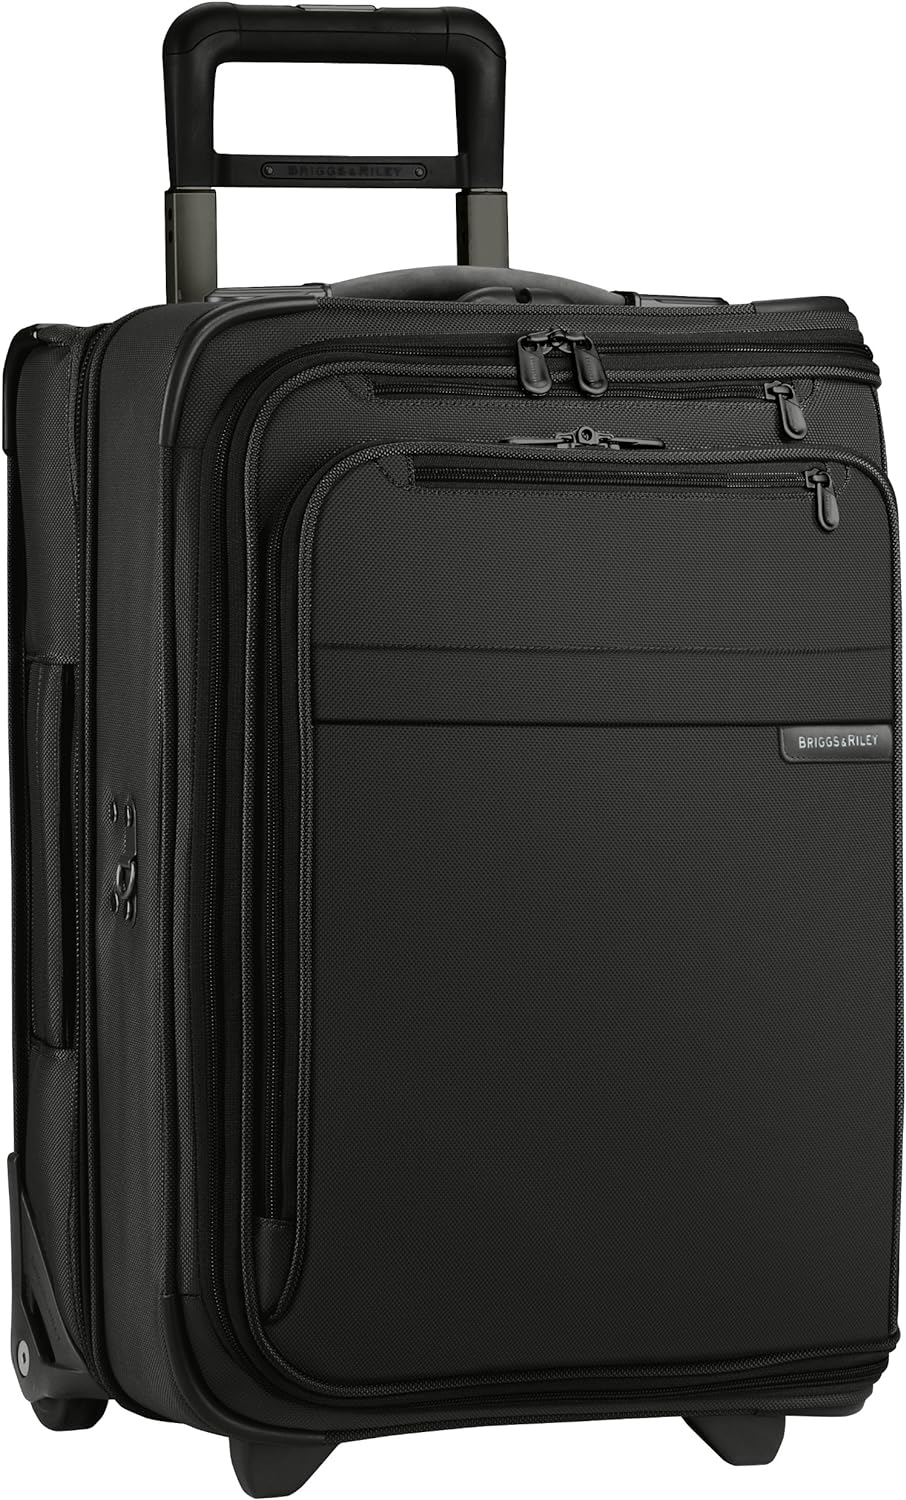 Briggs & Riley Baseline Domestic Carry-On Upright Travel Garment Bag, 56 cm, 43.6 liters, Black